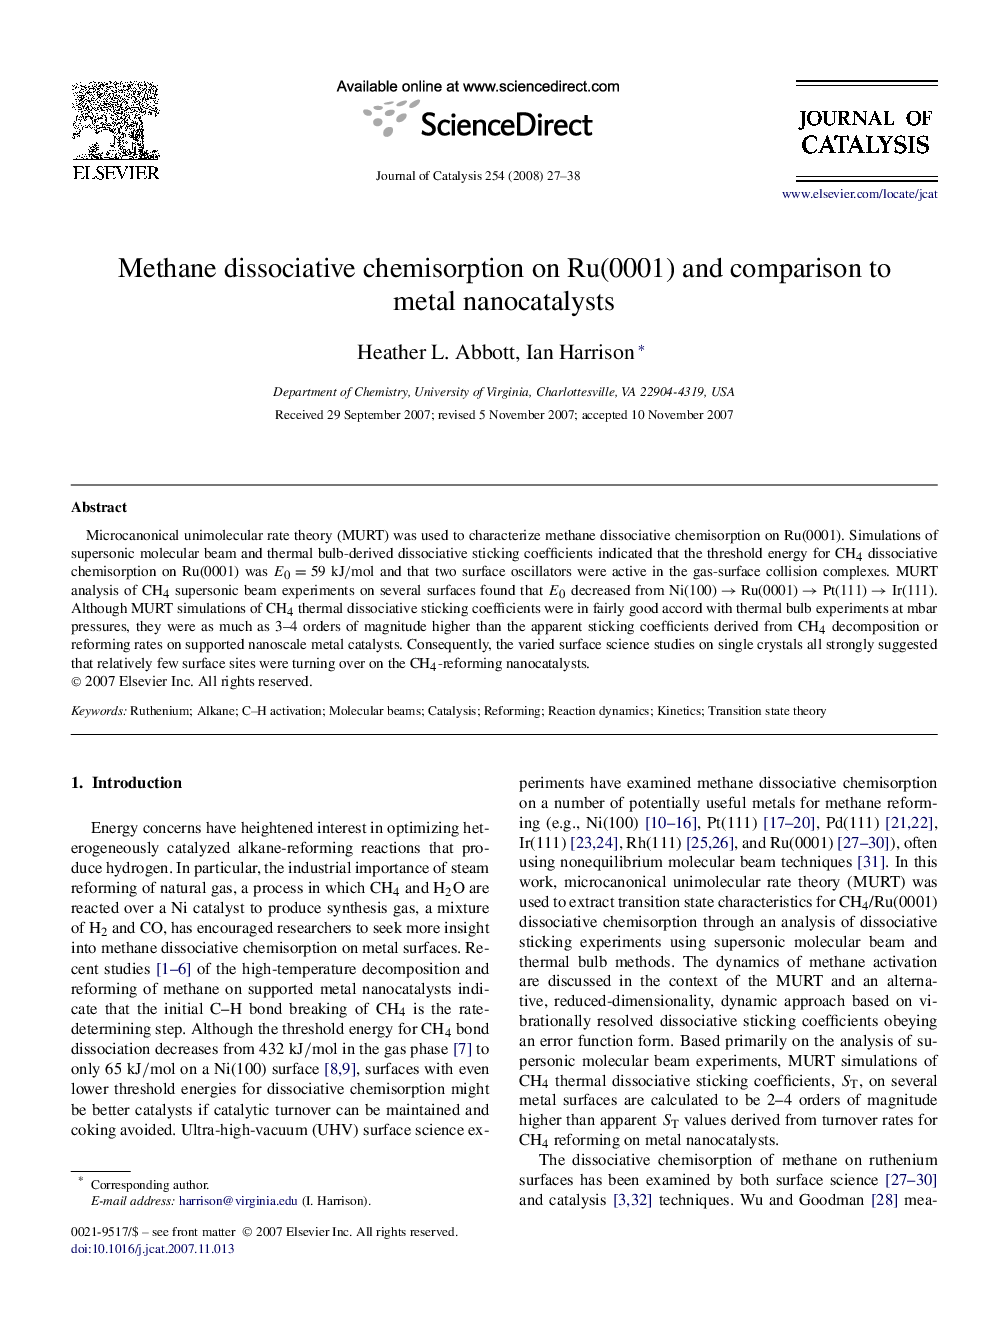 Methane dissociative chemisorption on Ru(0001) and comparison to metal nanocatalysts